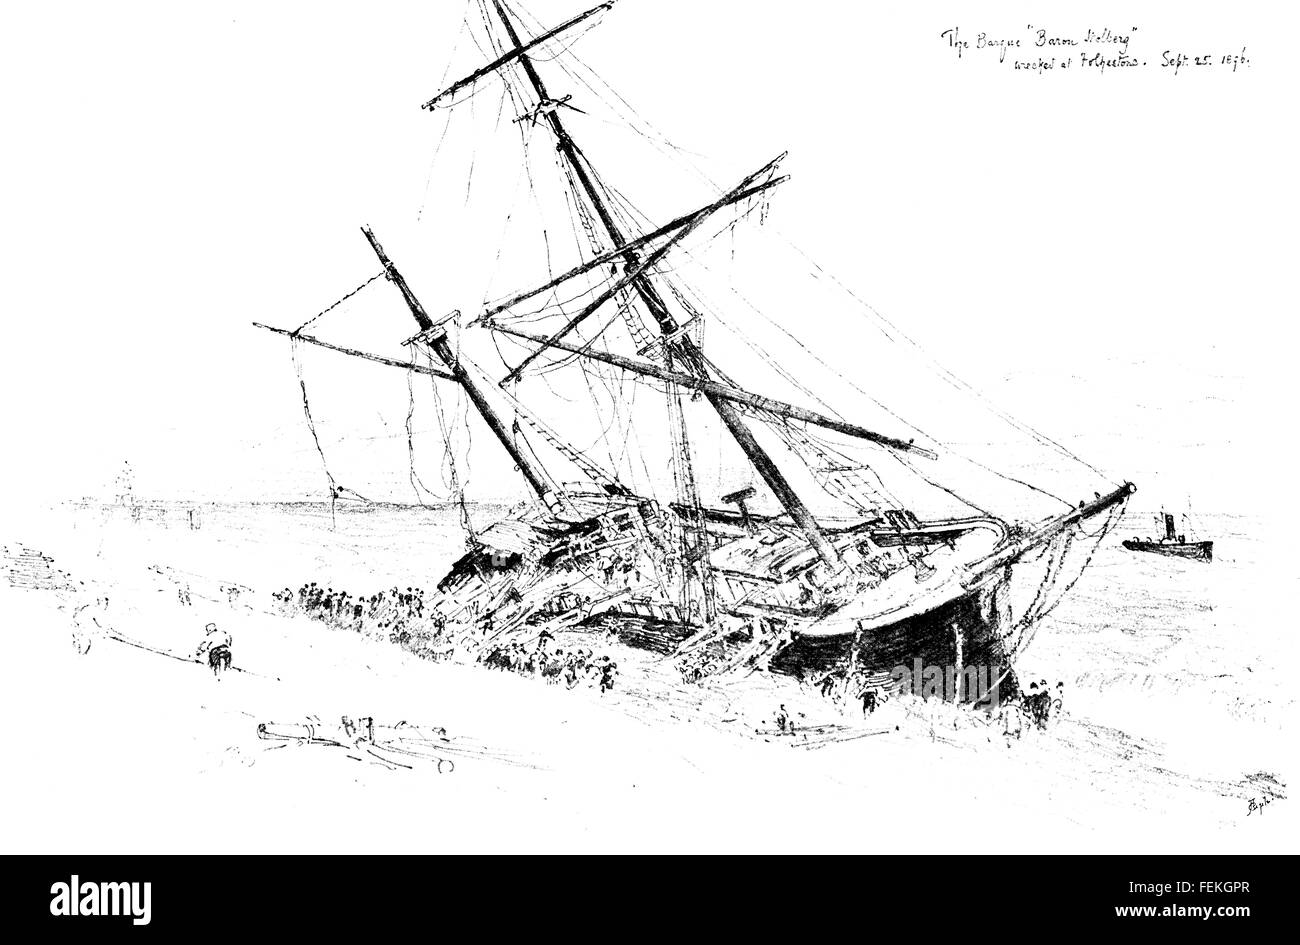 Barque Baron Holberg wrecked at Folkestone, September 5th 1896, pencil sketch halftone illustration by Edward William Charlton Stock Photo